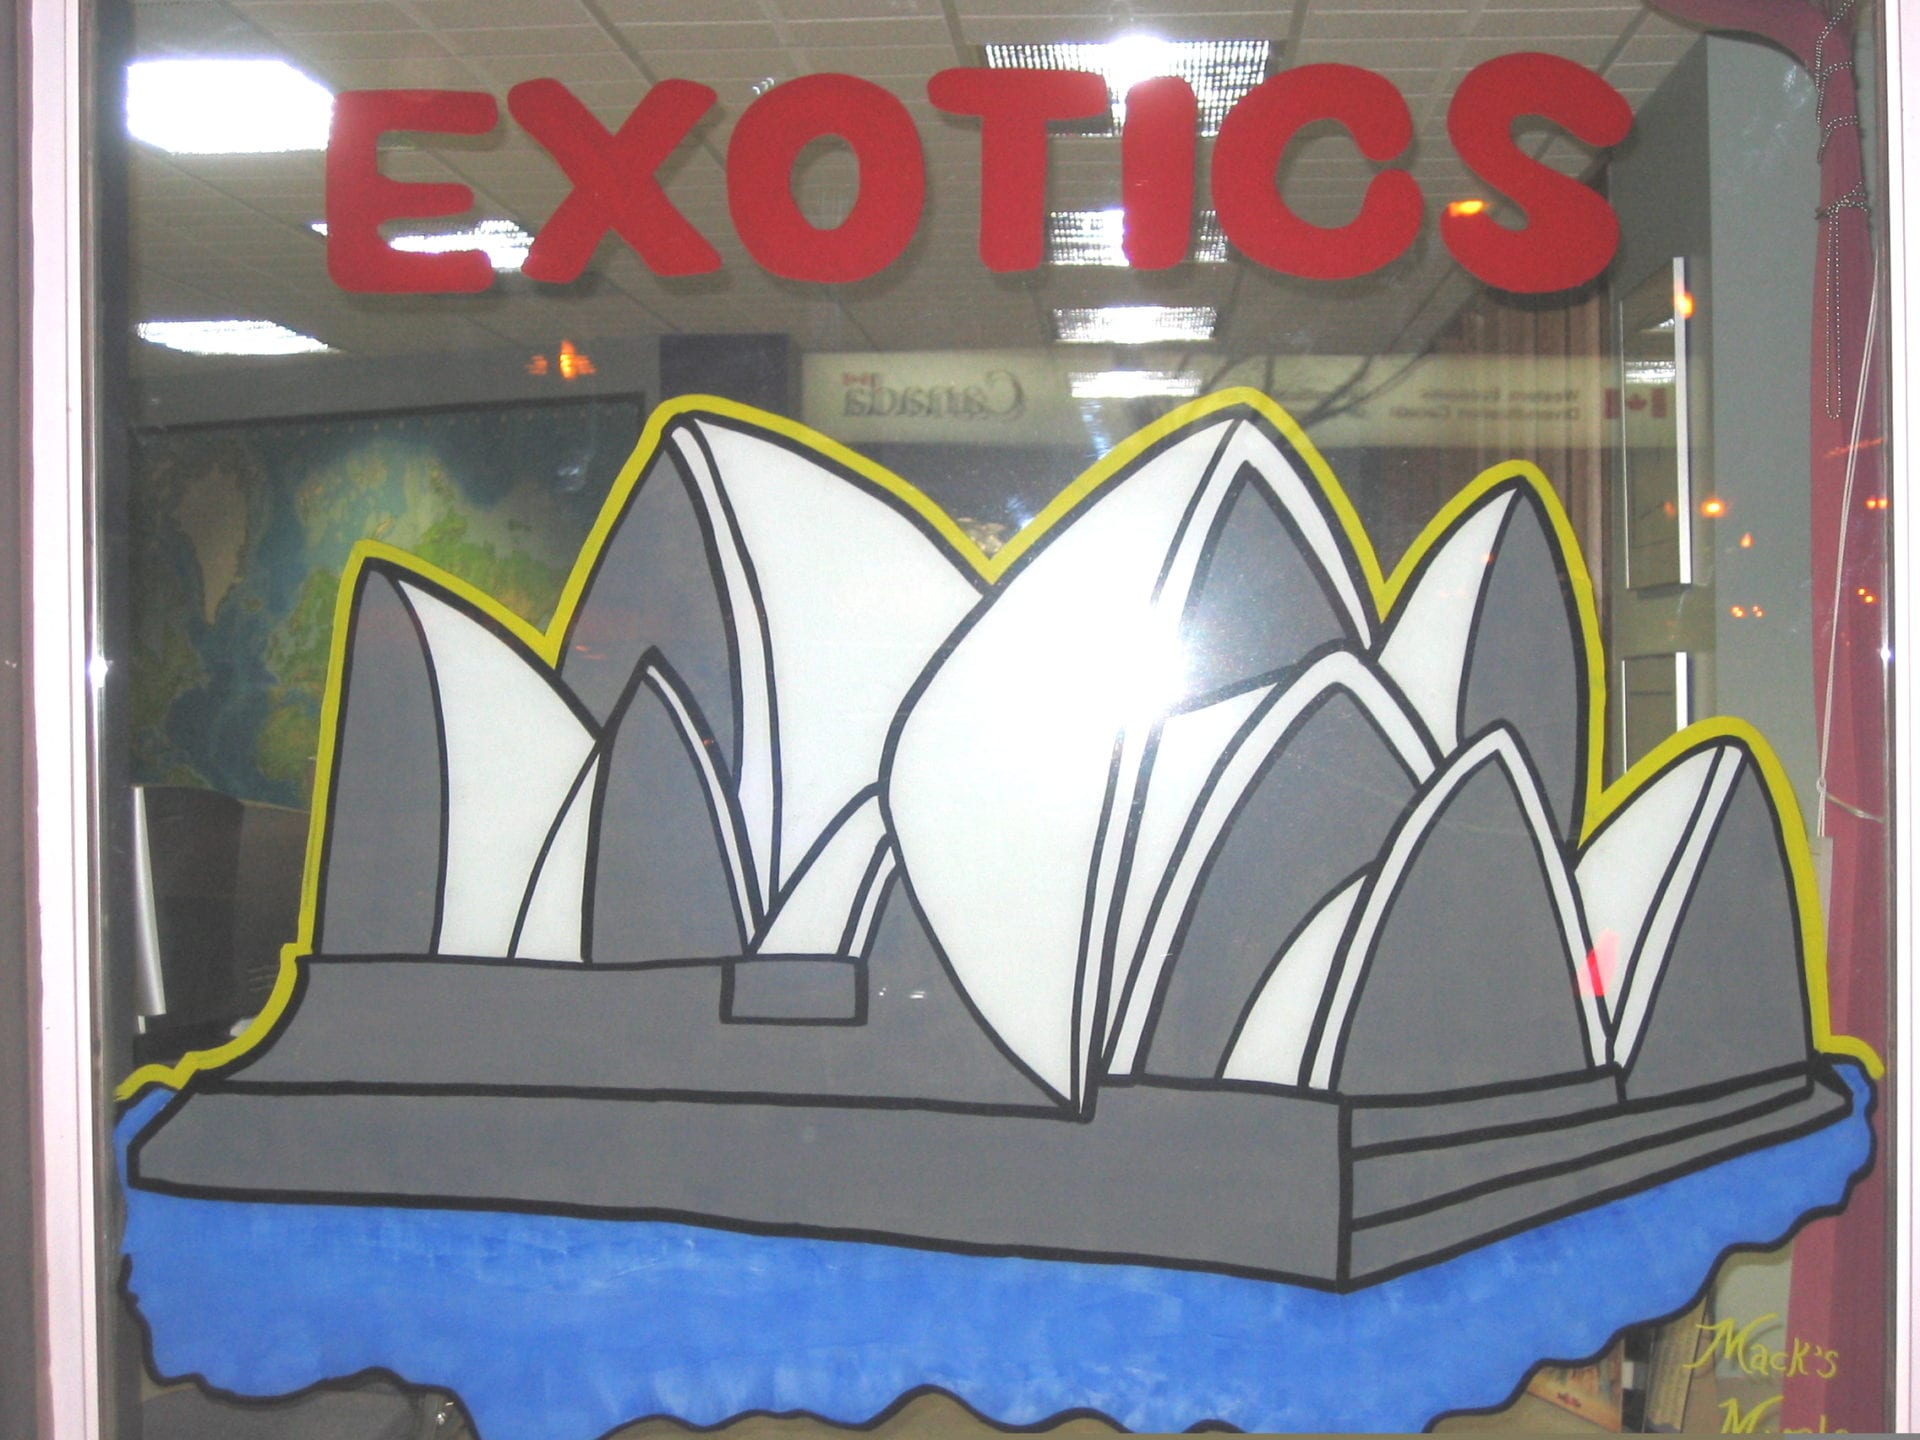 exotics with sydney theater